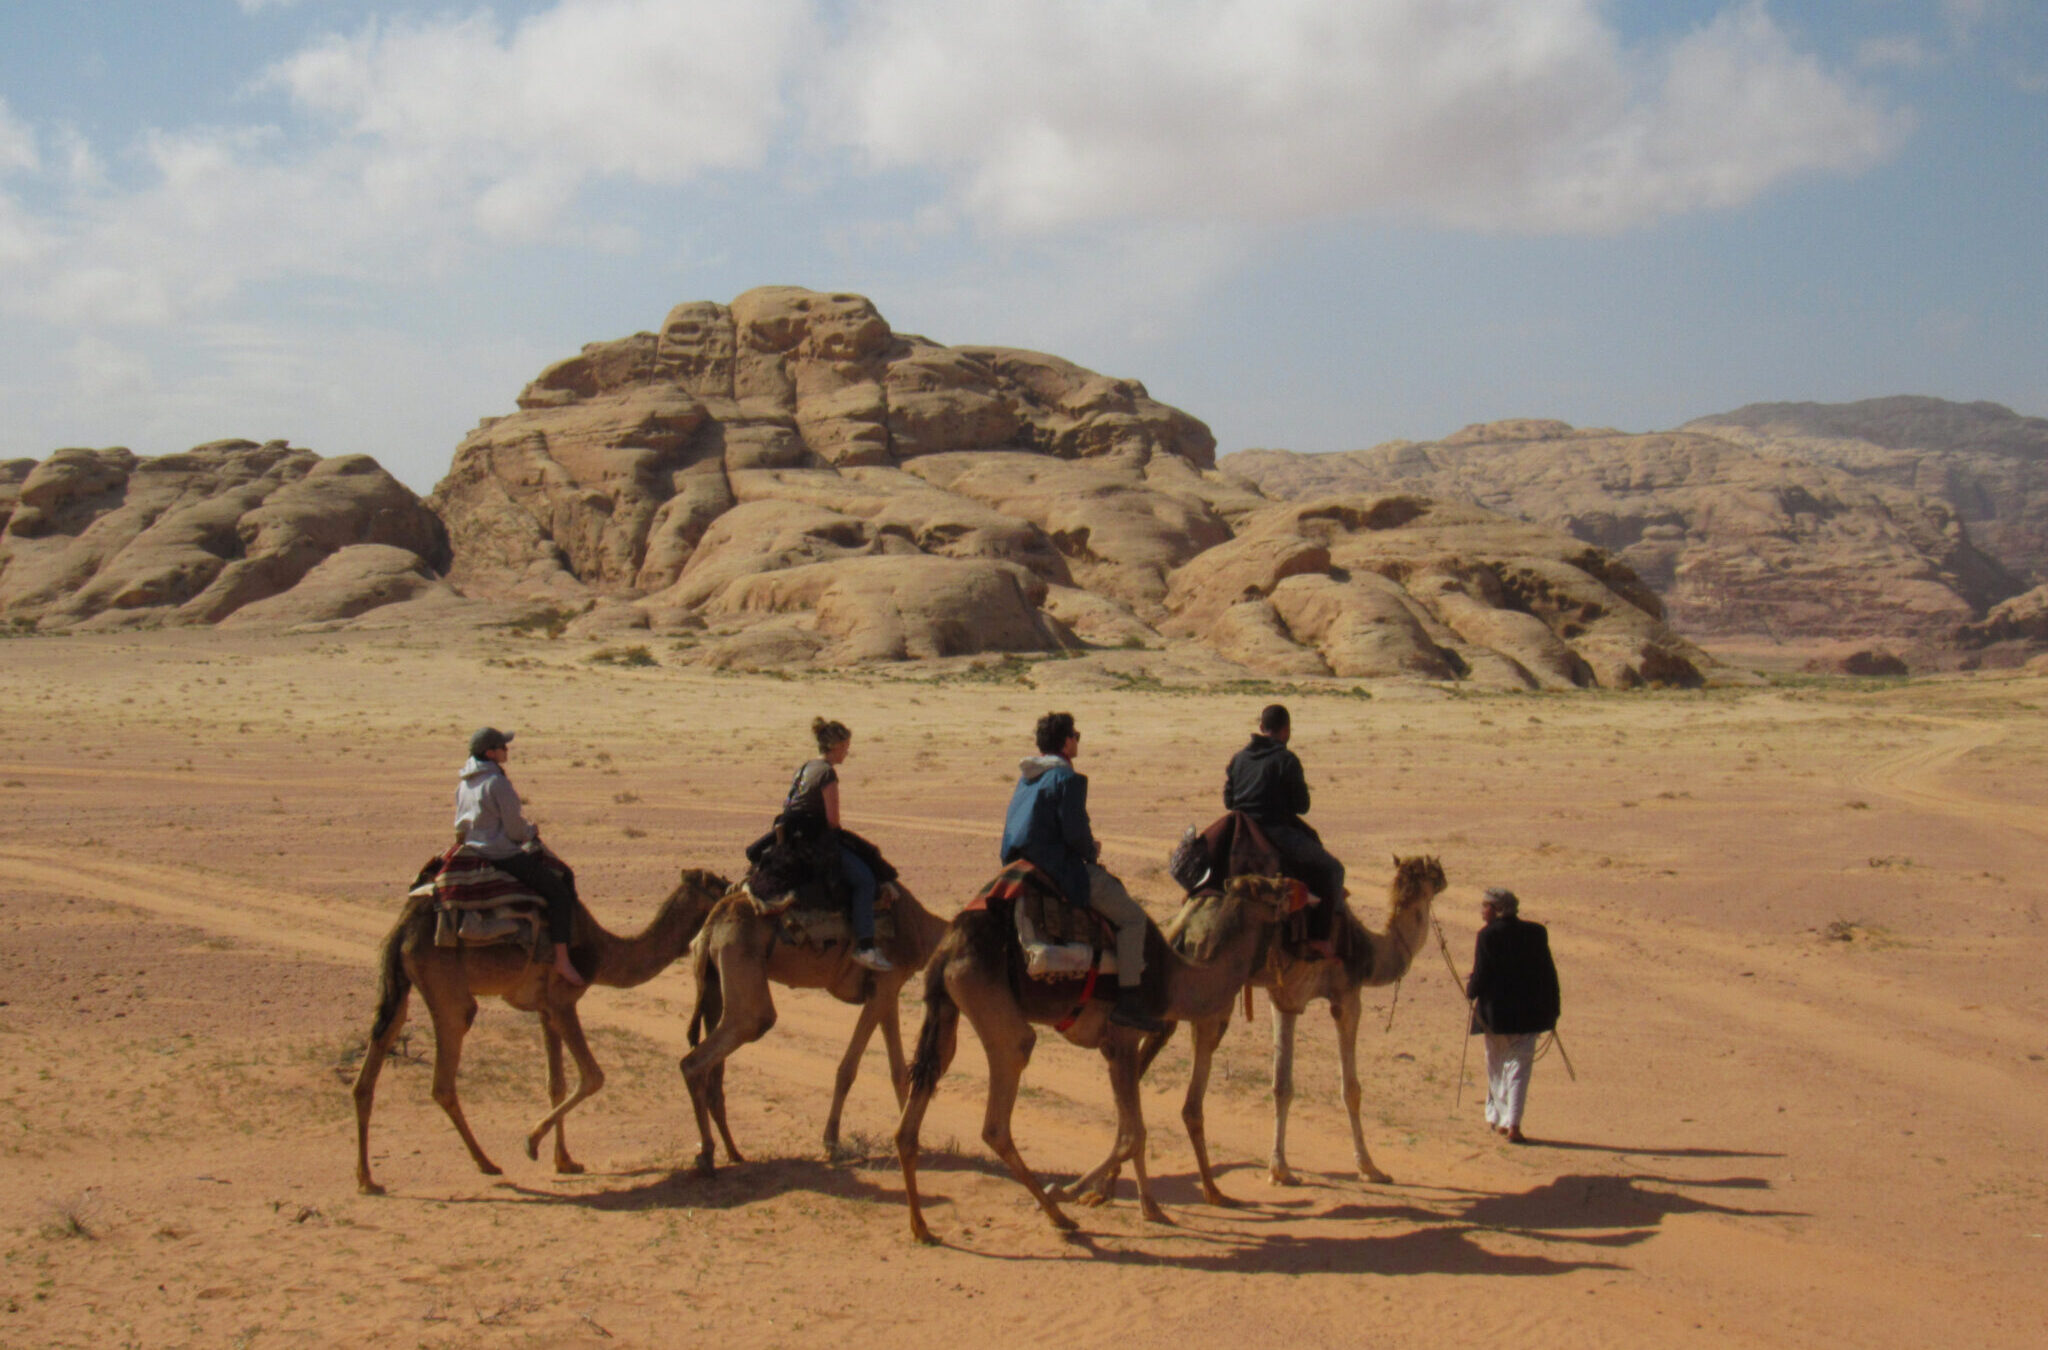 Students on a class trip to Jordan.